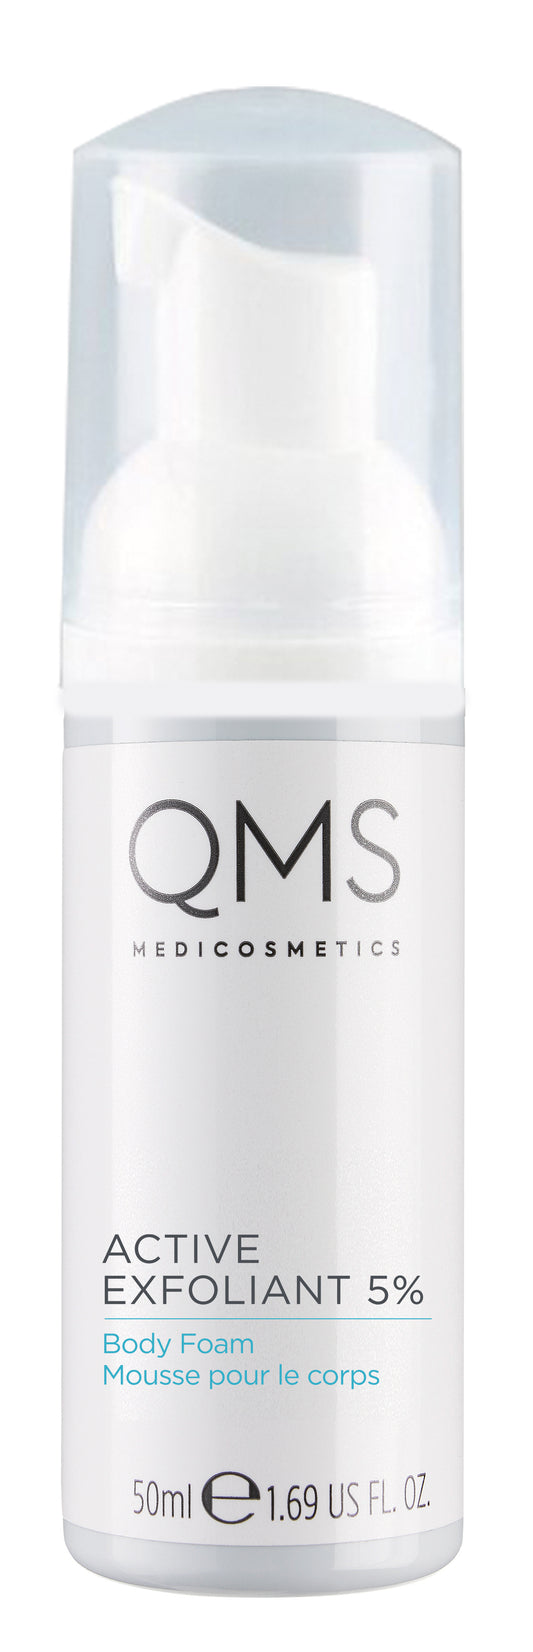 QMS Active Exfoliant 5% Body Foam 50 ml (discover size)